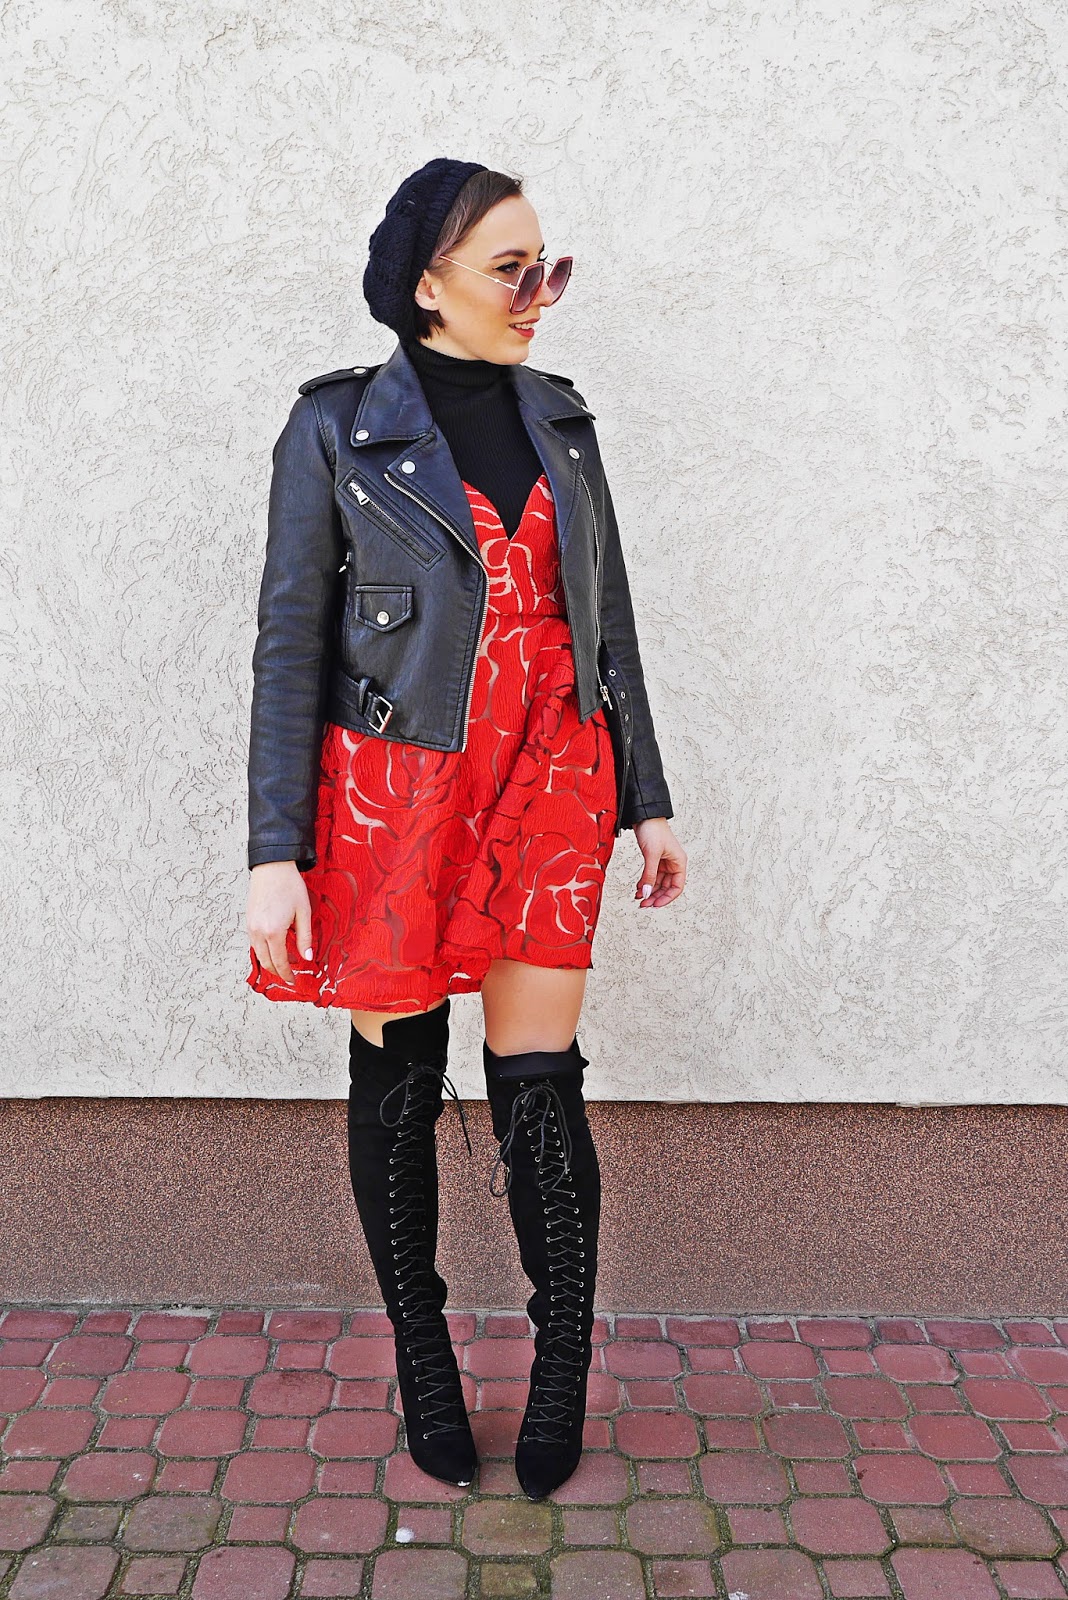 red dress roses biker jacket leather karyn blog modowy